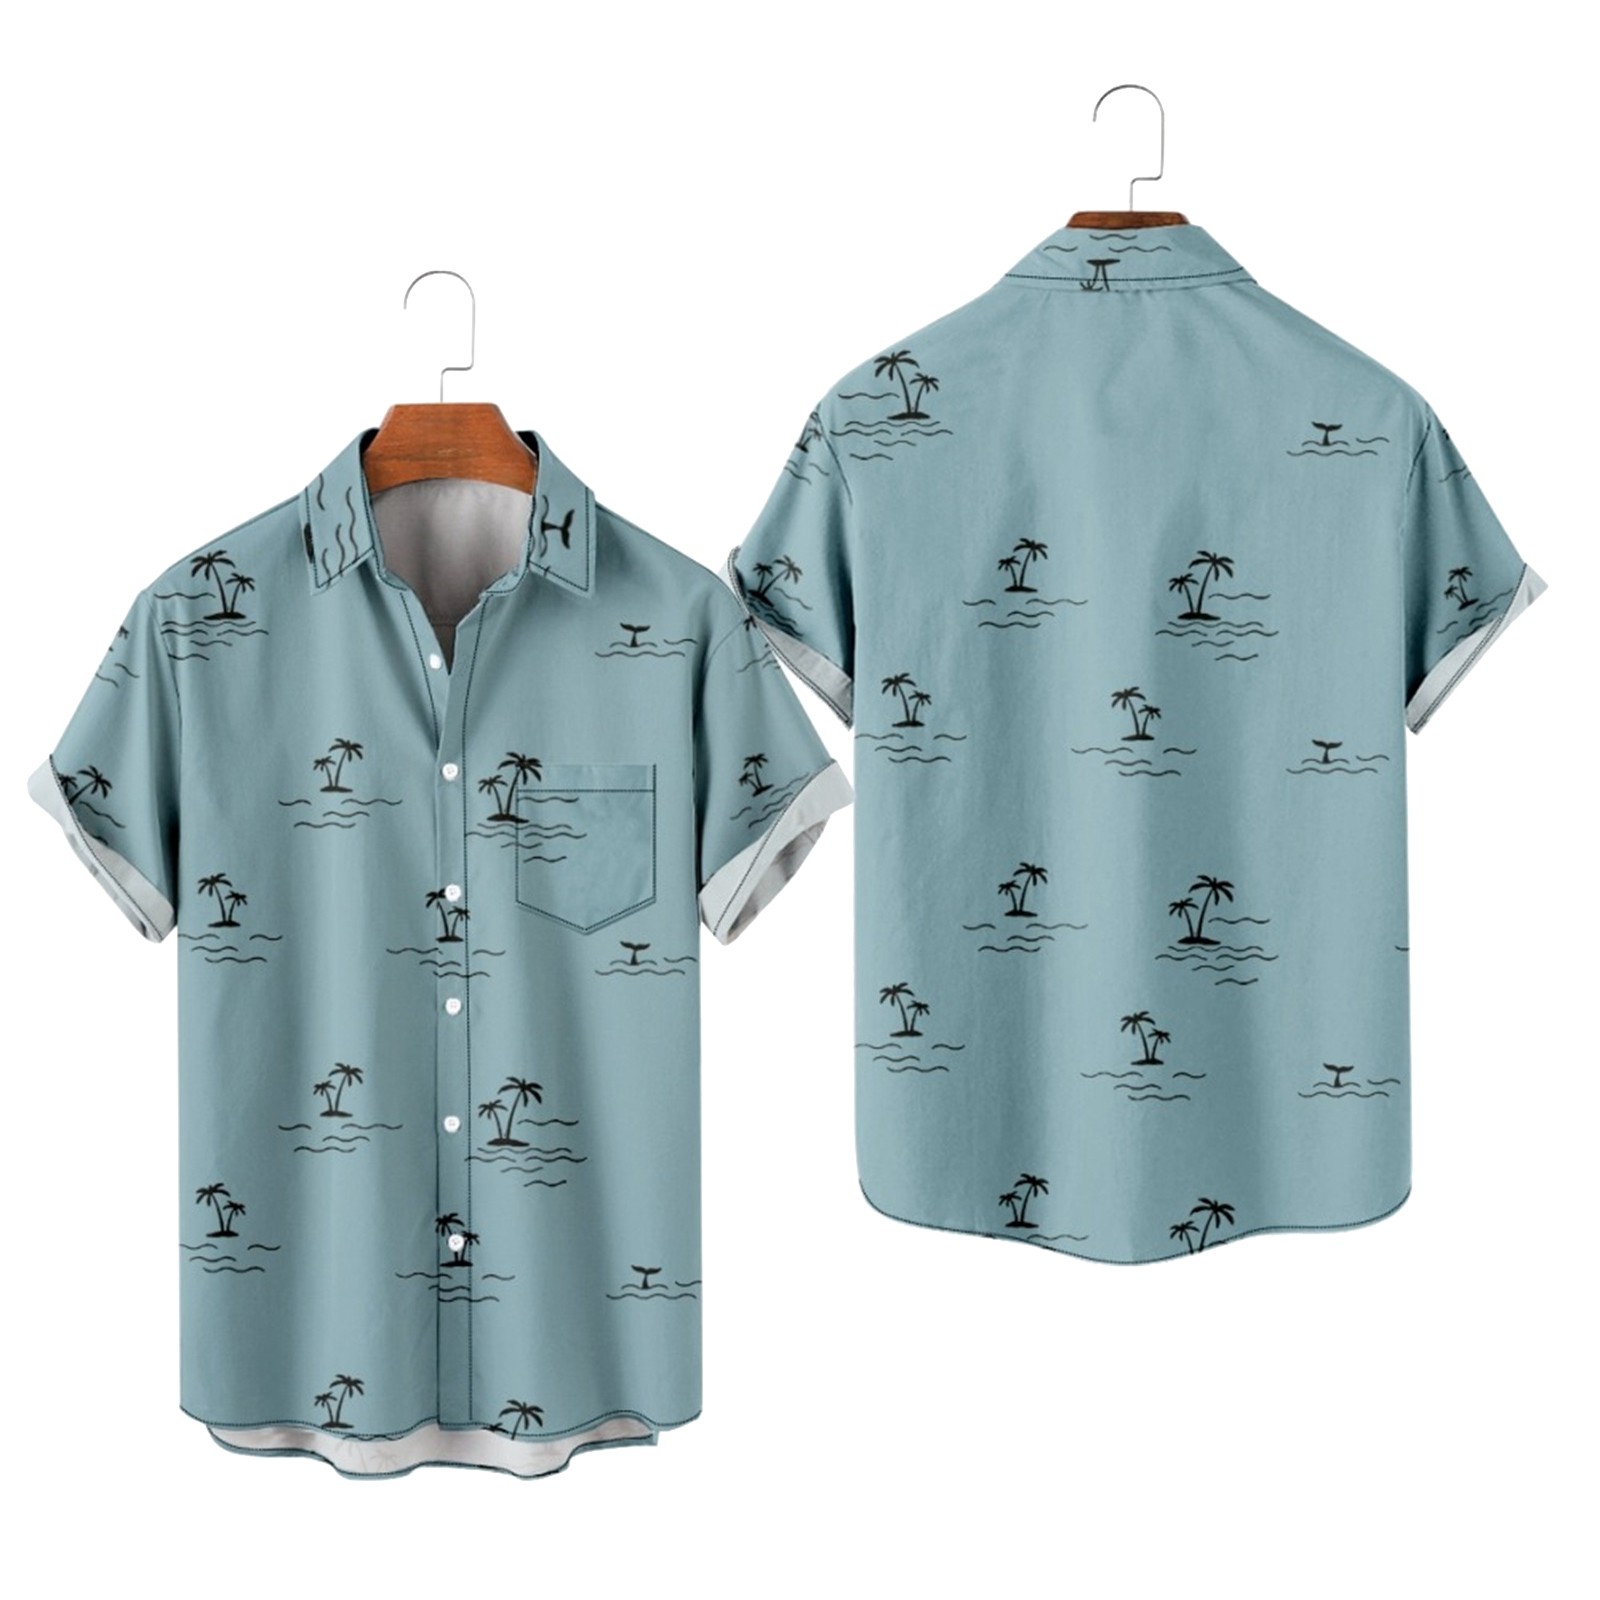 Hawaiian Shirt For Men,Mens Funny Hawaiian Shirts 3D Graphic Button Short Sleeve Tropical Holiday Beach Aloha Shirt American Flag Shirts Light Bluejpeg